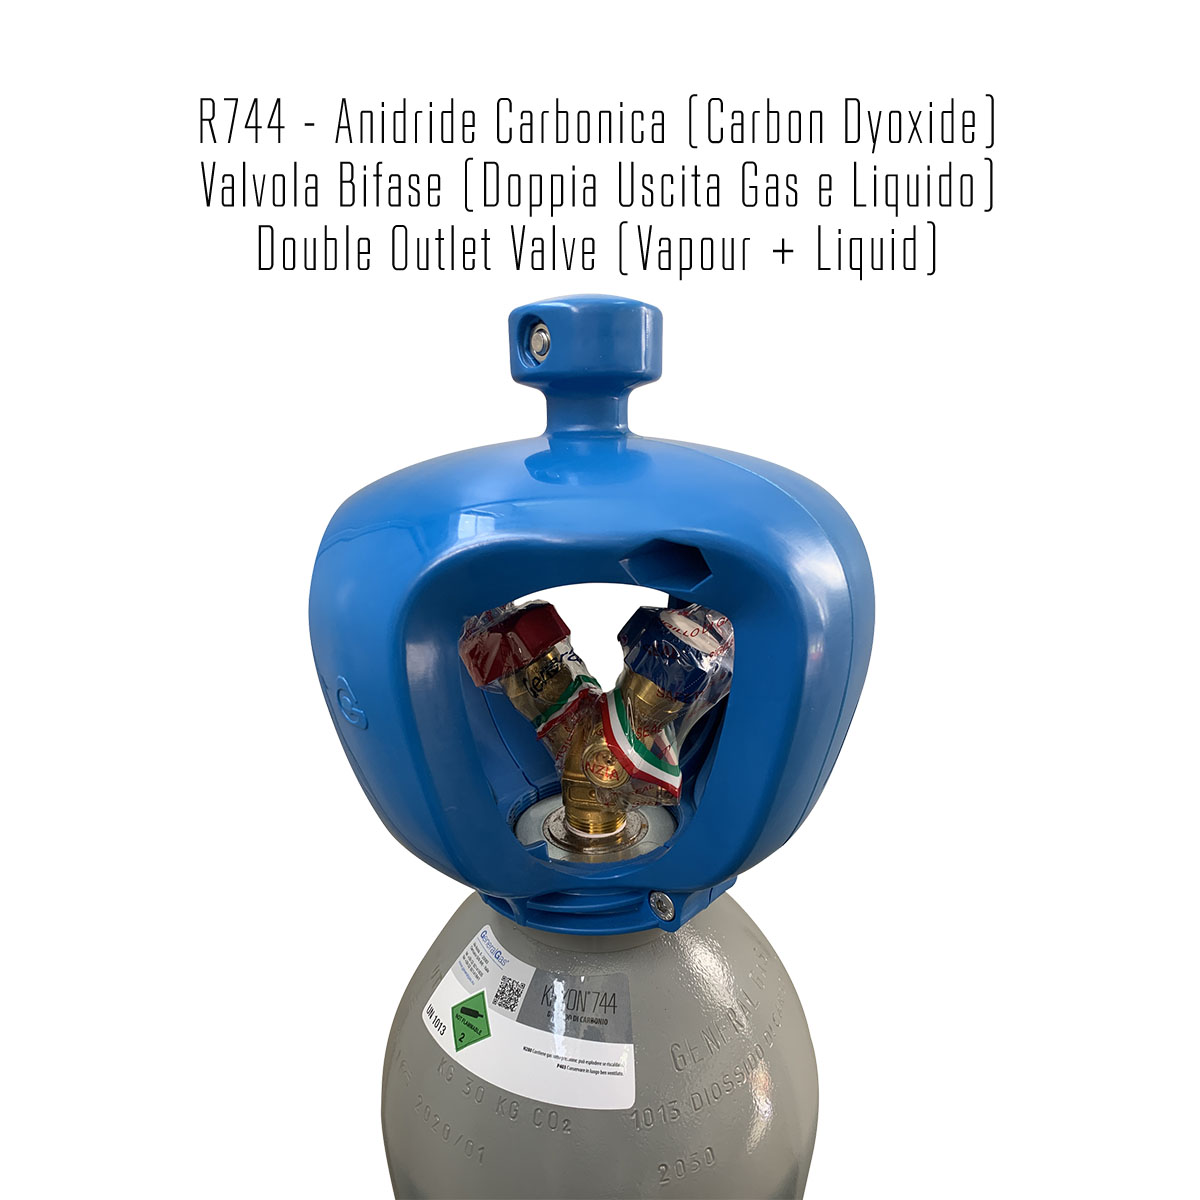 R744 Kryon® 744 - CO2 anidride carbonica refrigerazione in Bombola a Rendere - 27 Lt - 20 Kg - valvola bifase (liquido + gas) - Foto 2